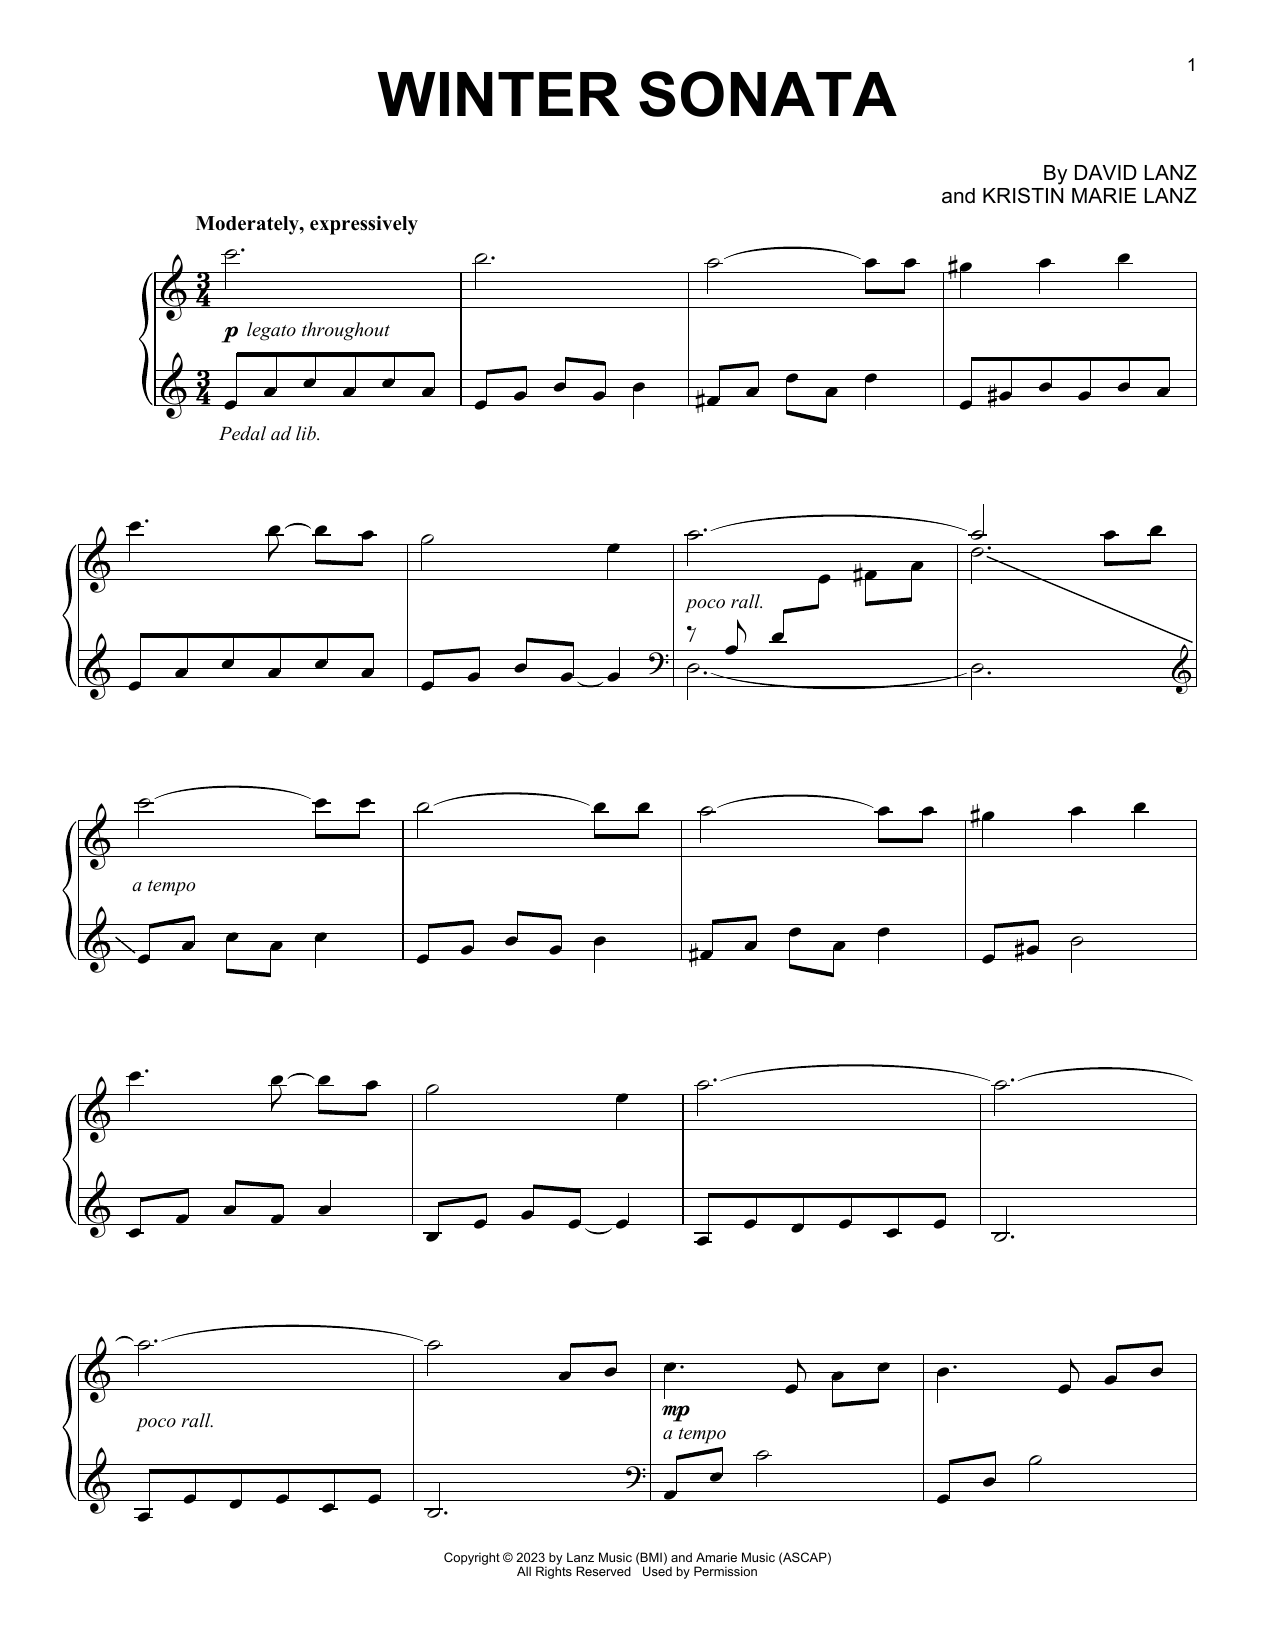 David Lanz Winter Sonata Sheet Music Notes & Chords for Piano Solo - Download or Print PDF